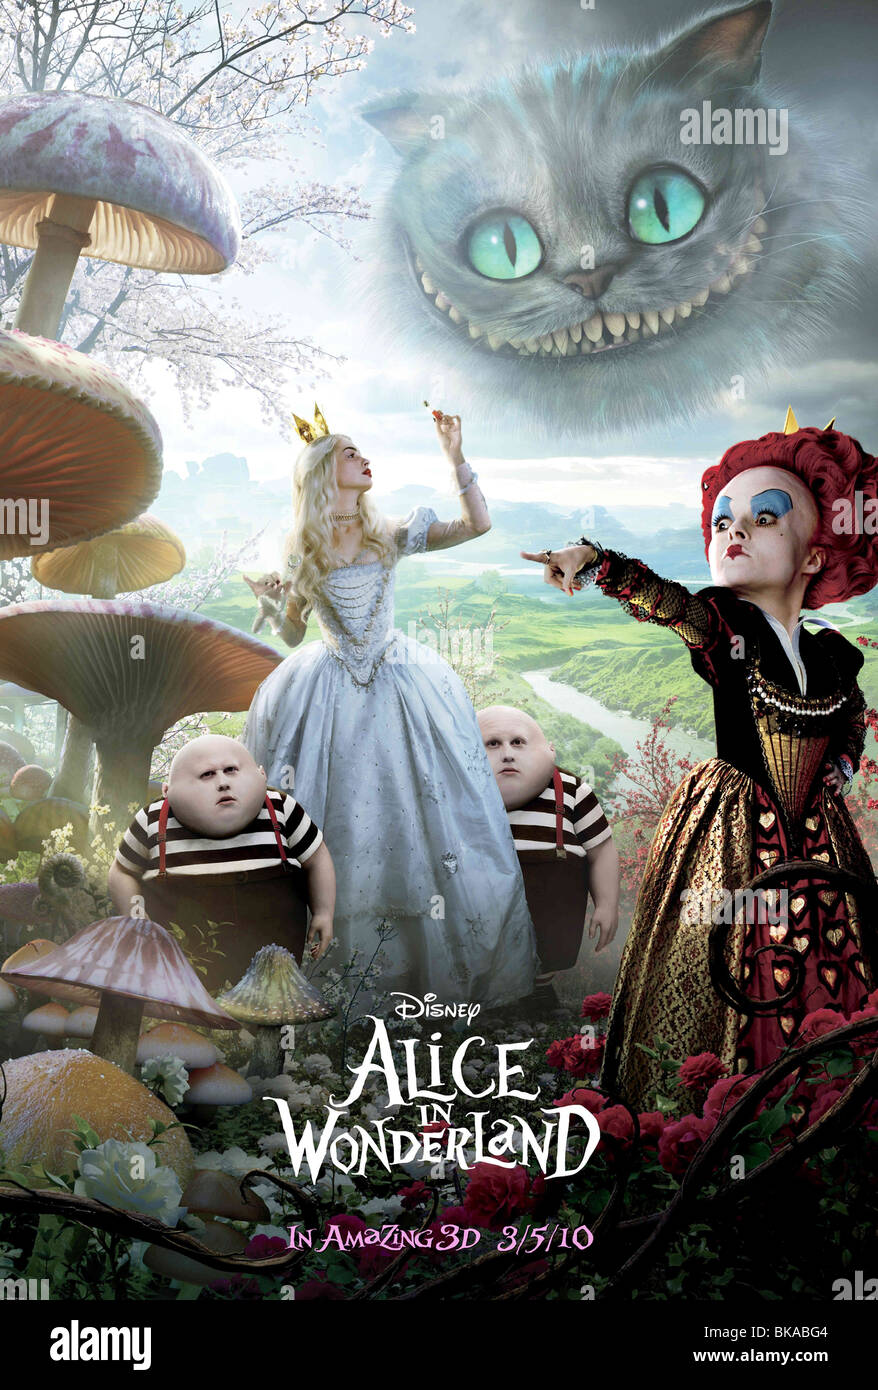 Alice im Wunderland-Jahr: 2010 - USA Regie: Tim Burton Film-Poster (USA  Stockfotografie - Alamy